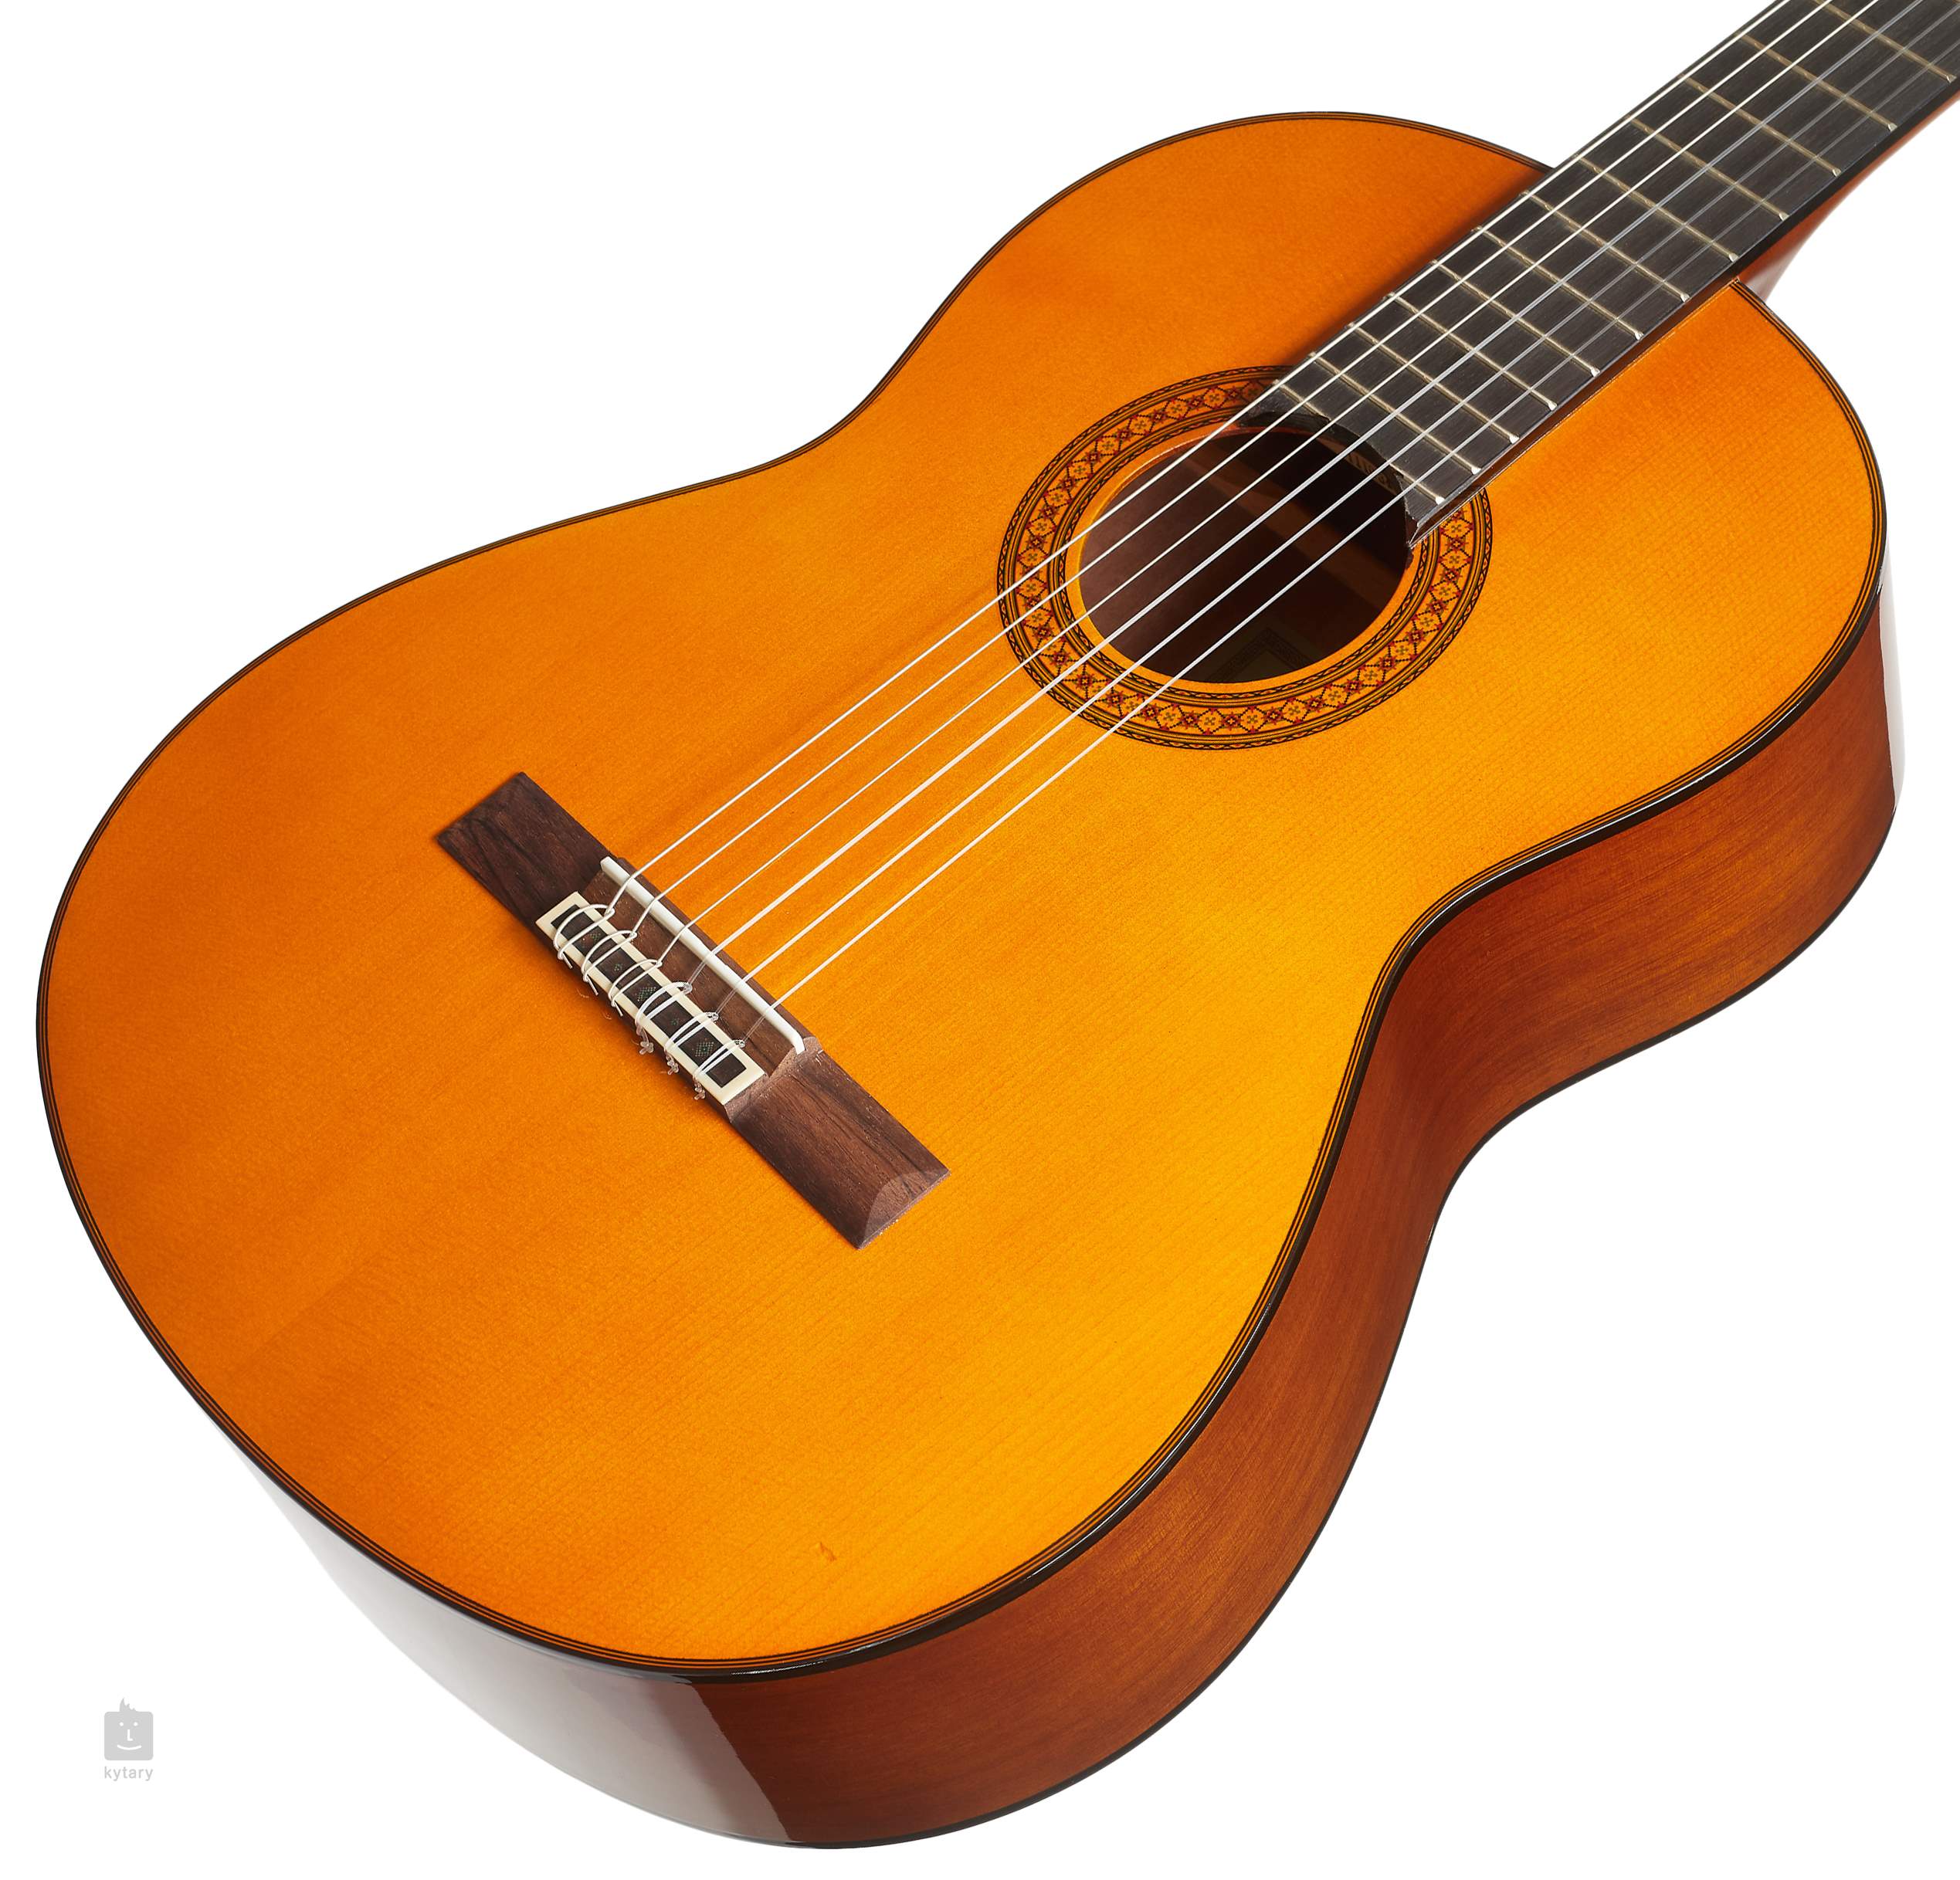 Yamaha Guitare Classique d'Etude – Vernis – C80